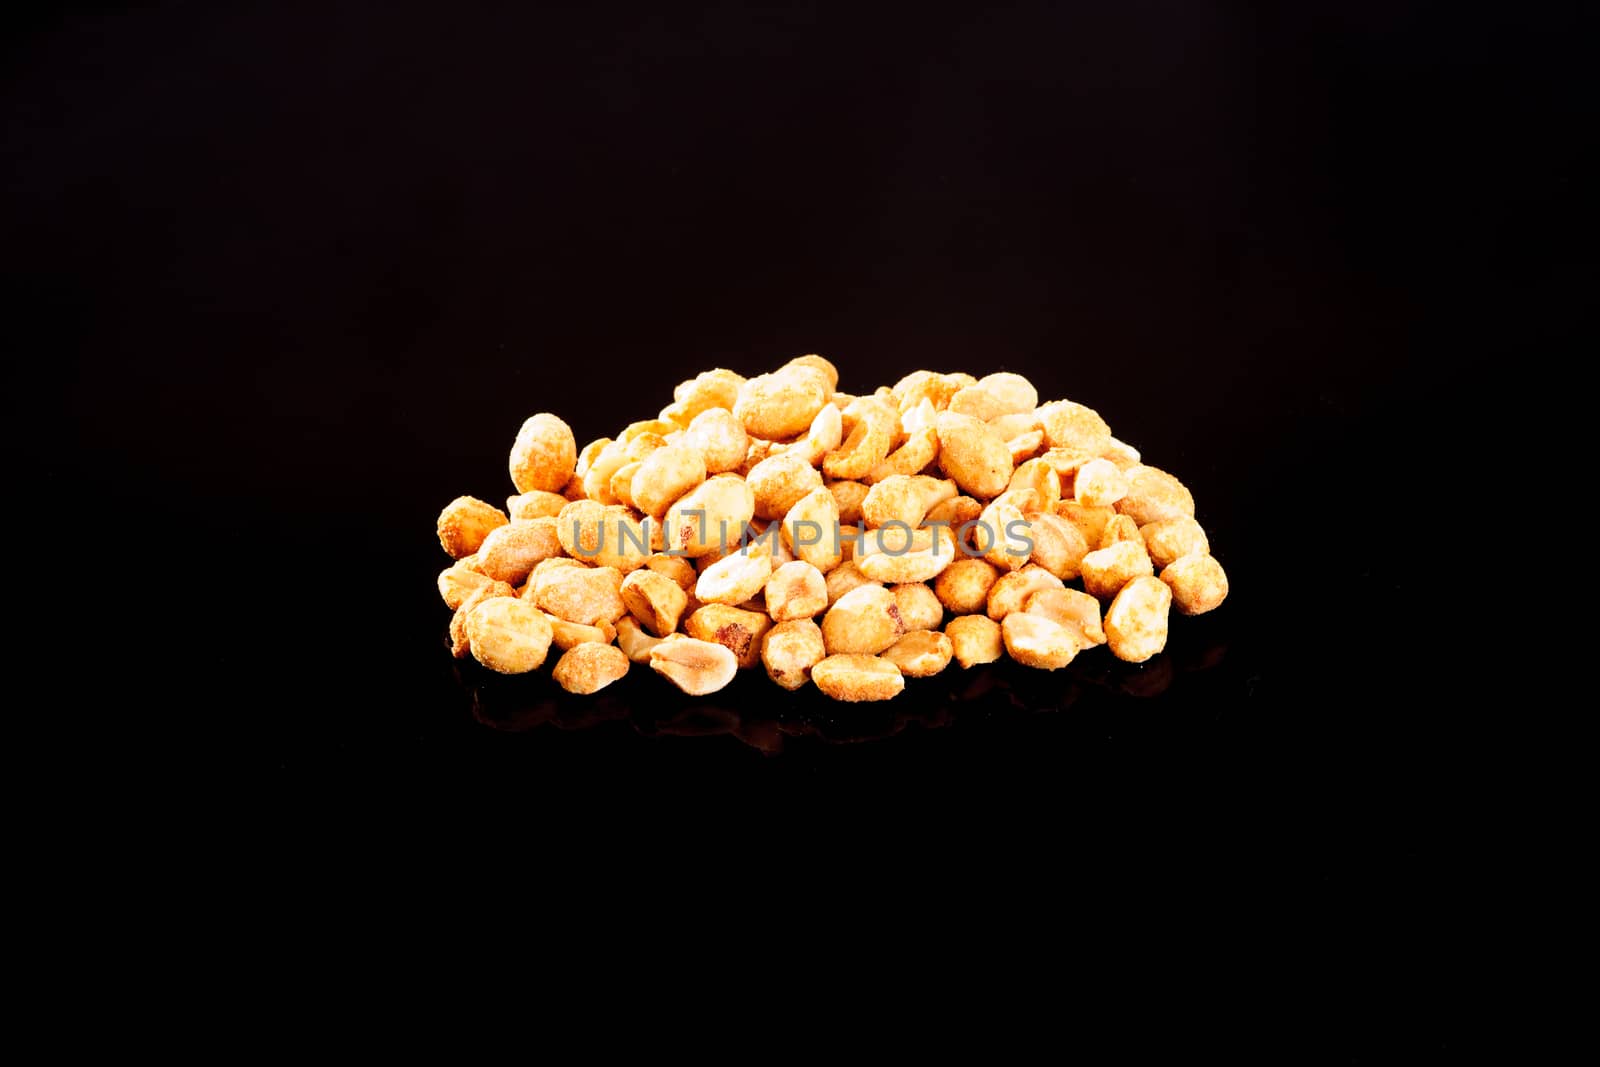 Roasted Salted Peanuts by RnDmS